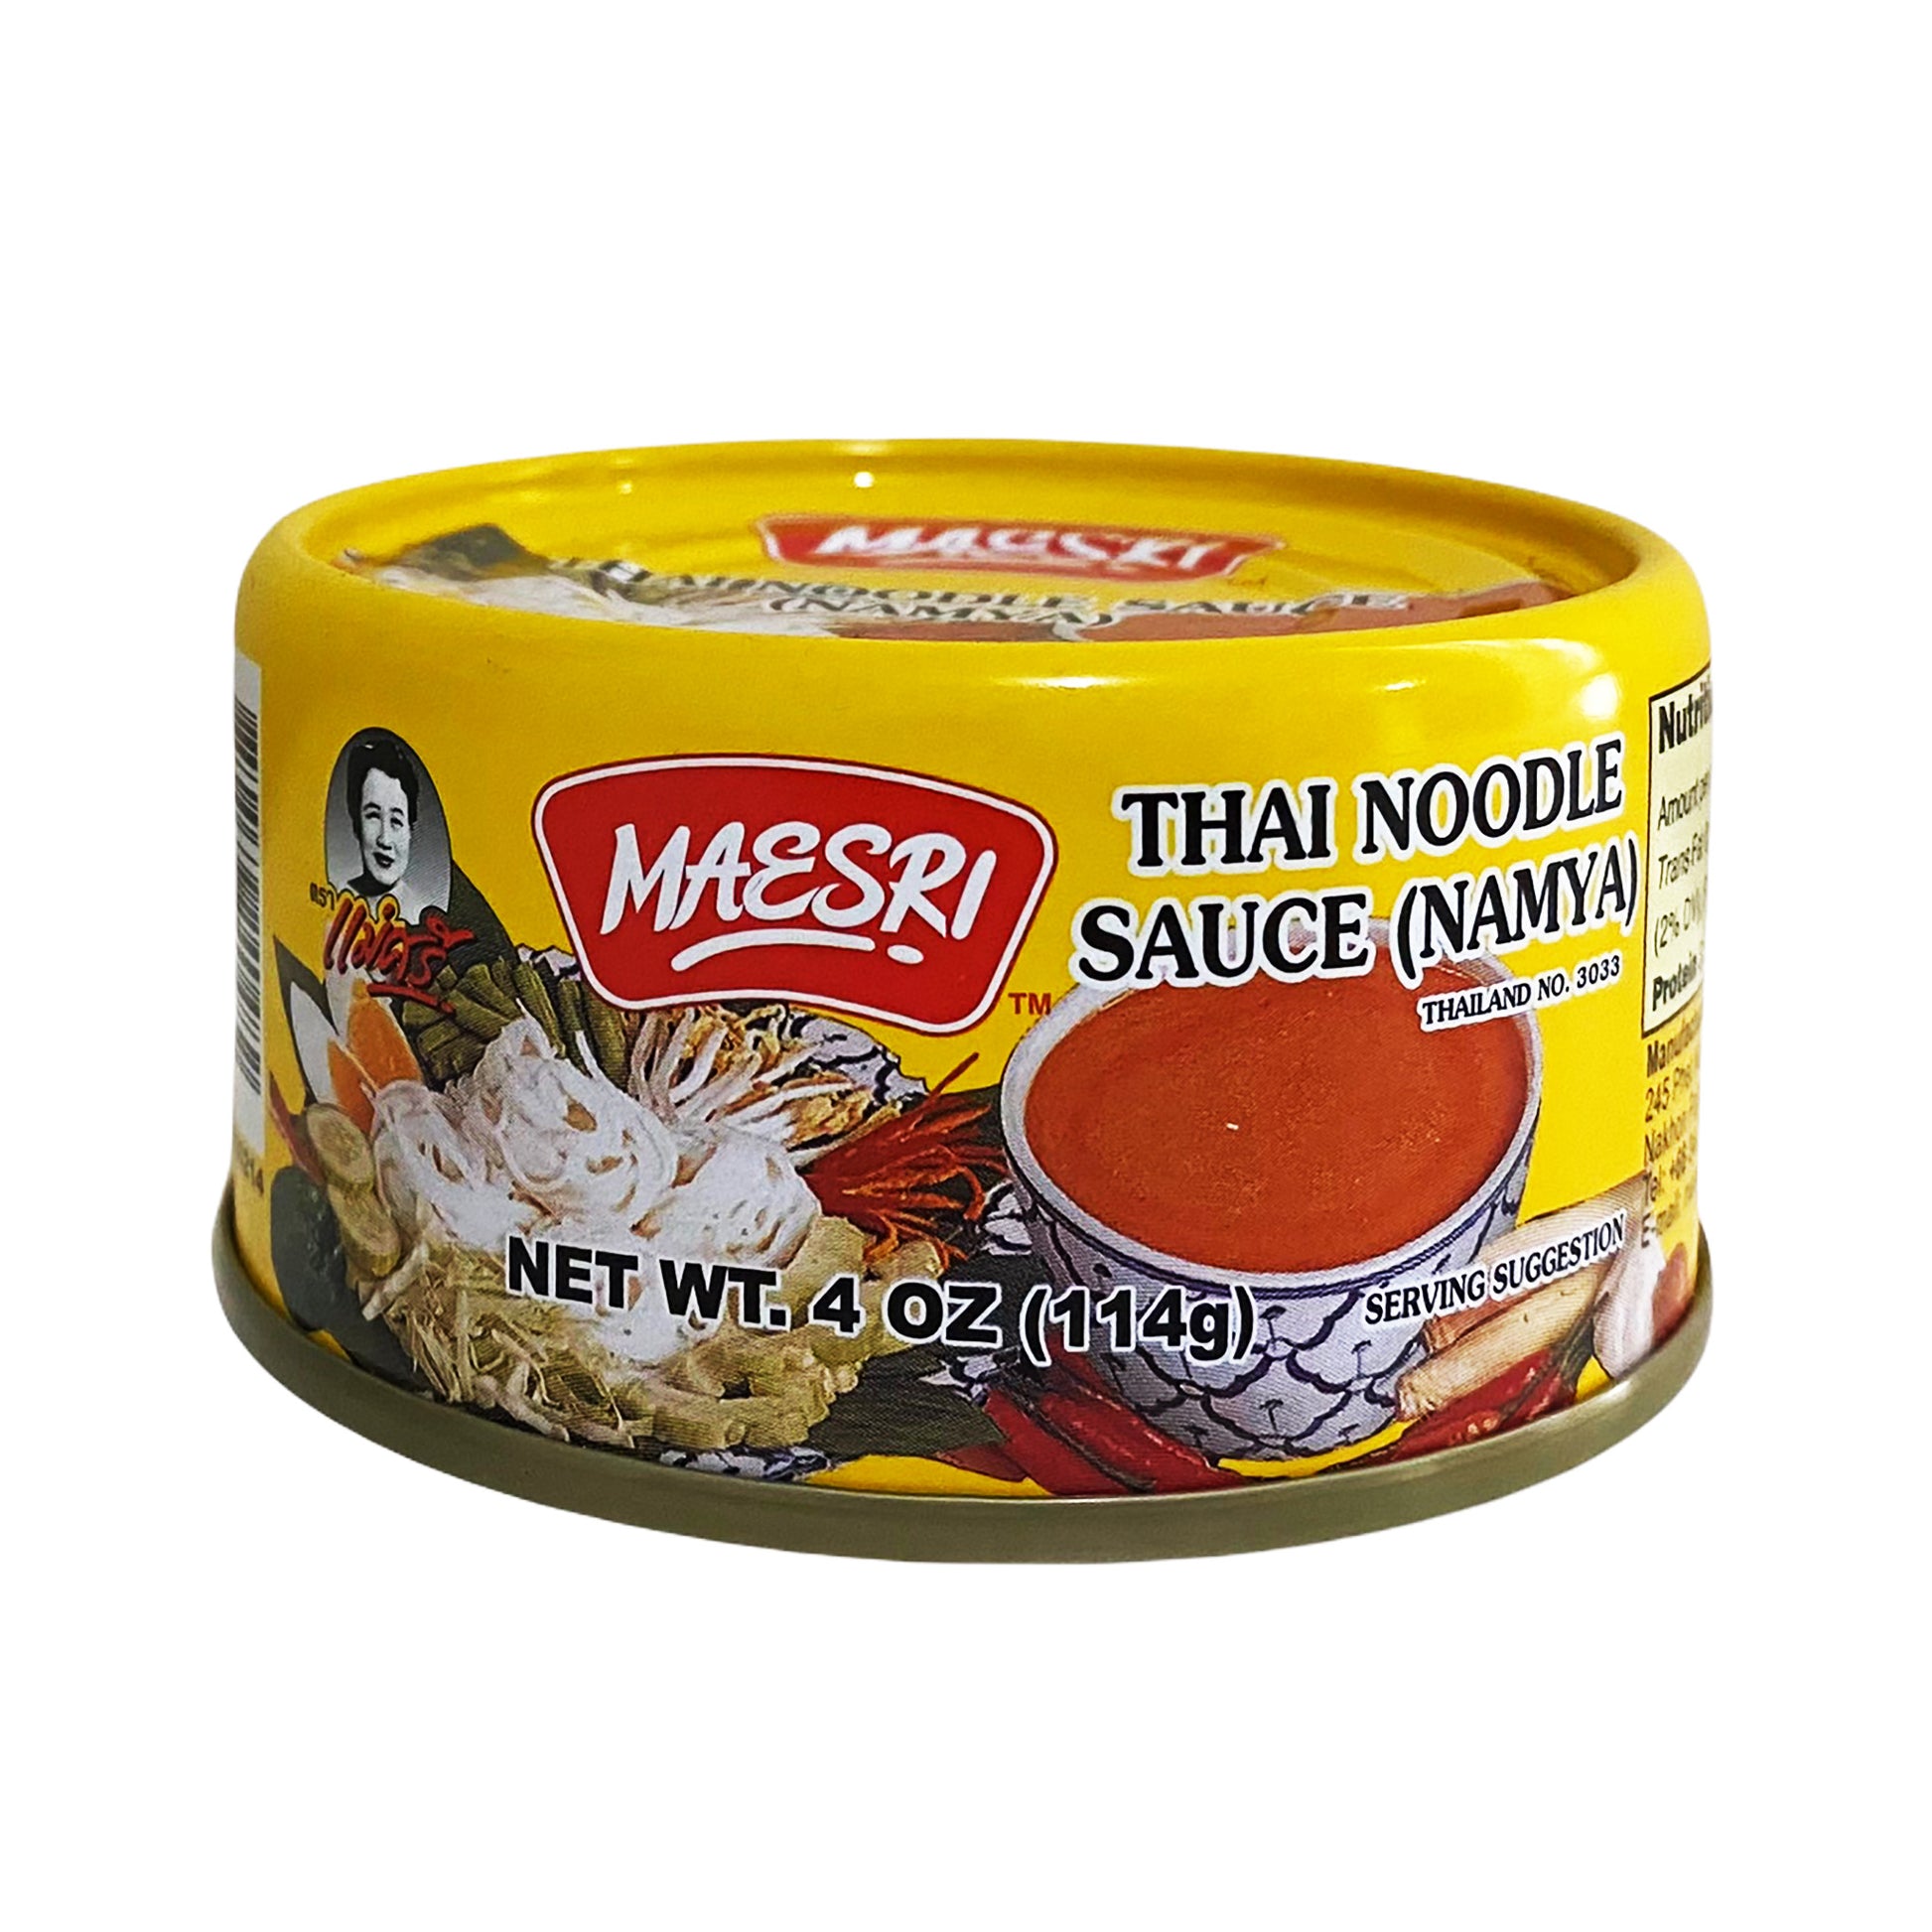 Front graphic image of Maesri Thai Noodle Sauce - Namya 4oz (114g)